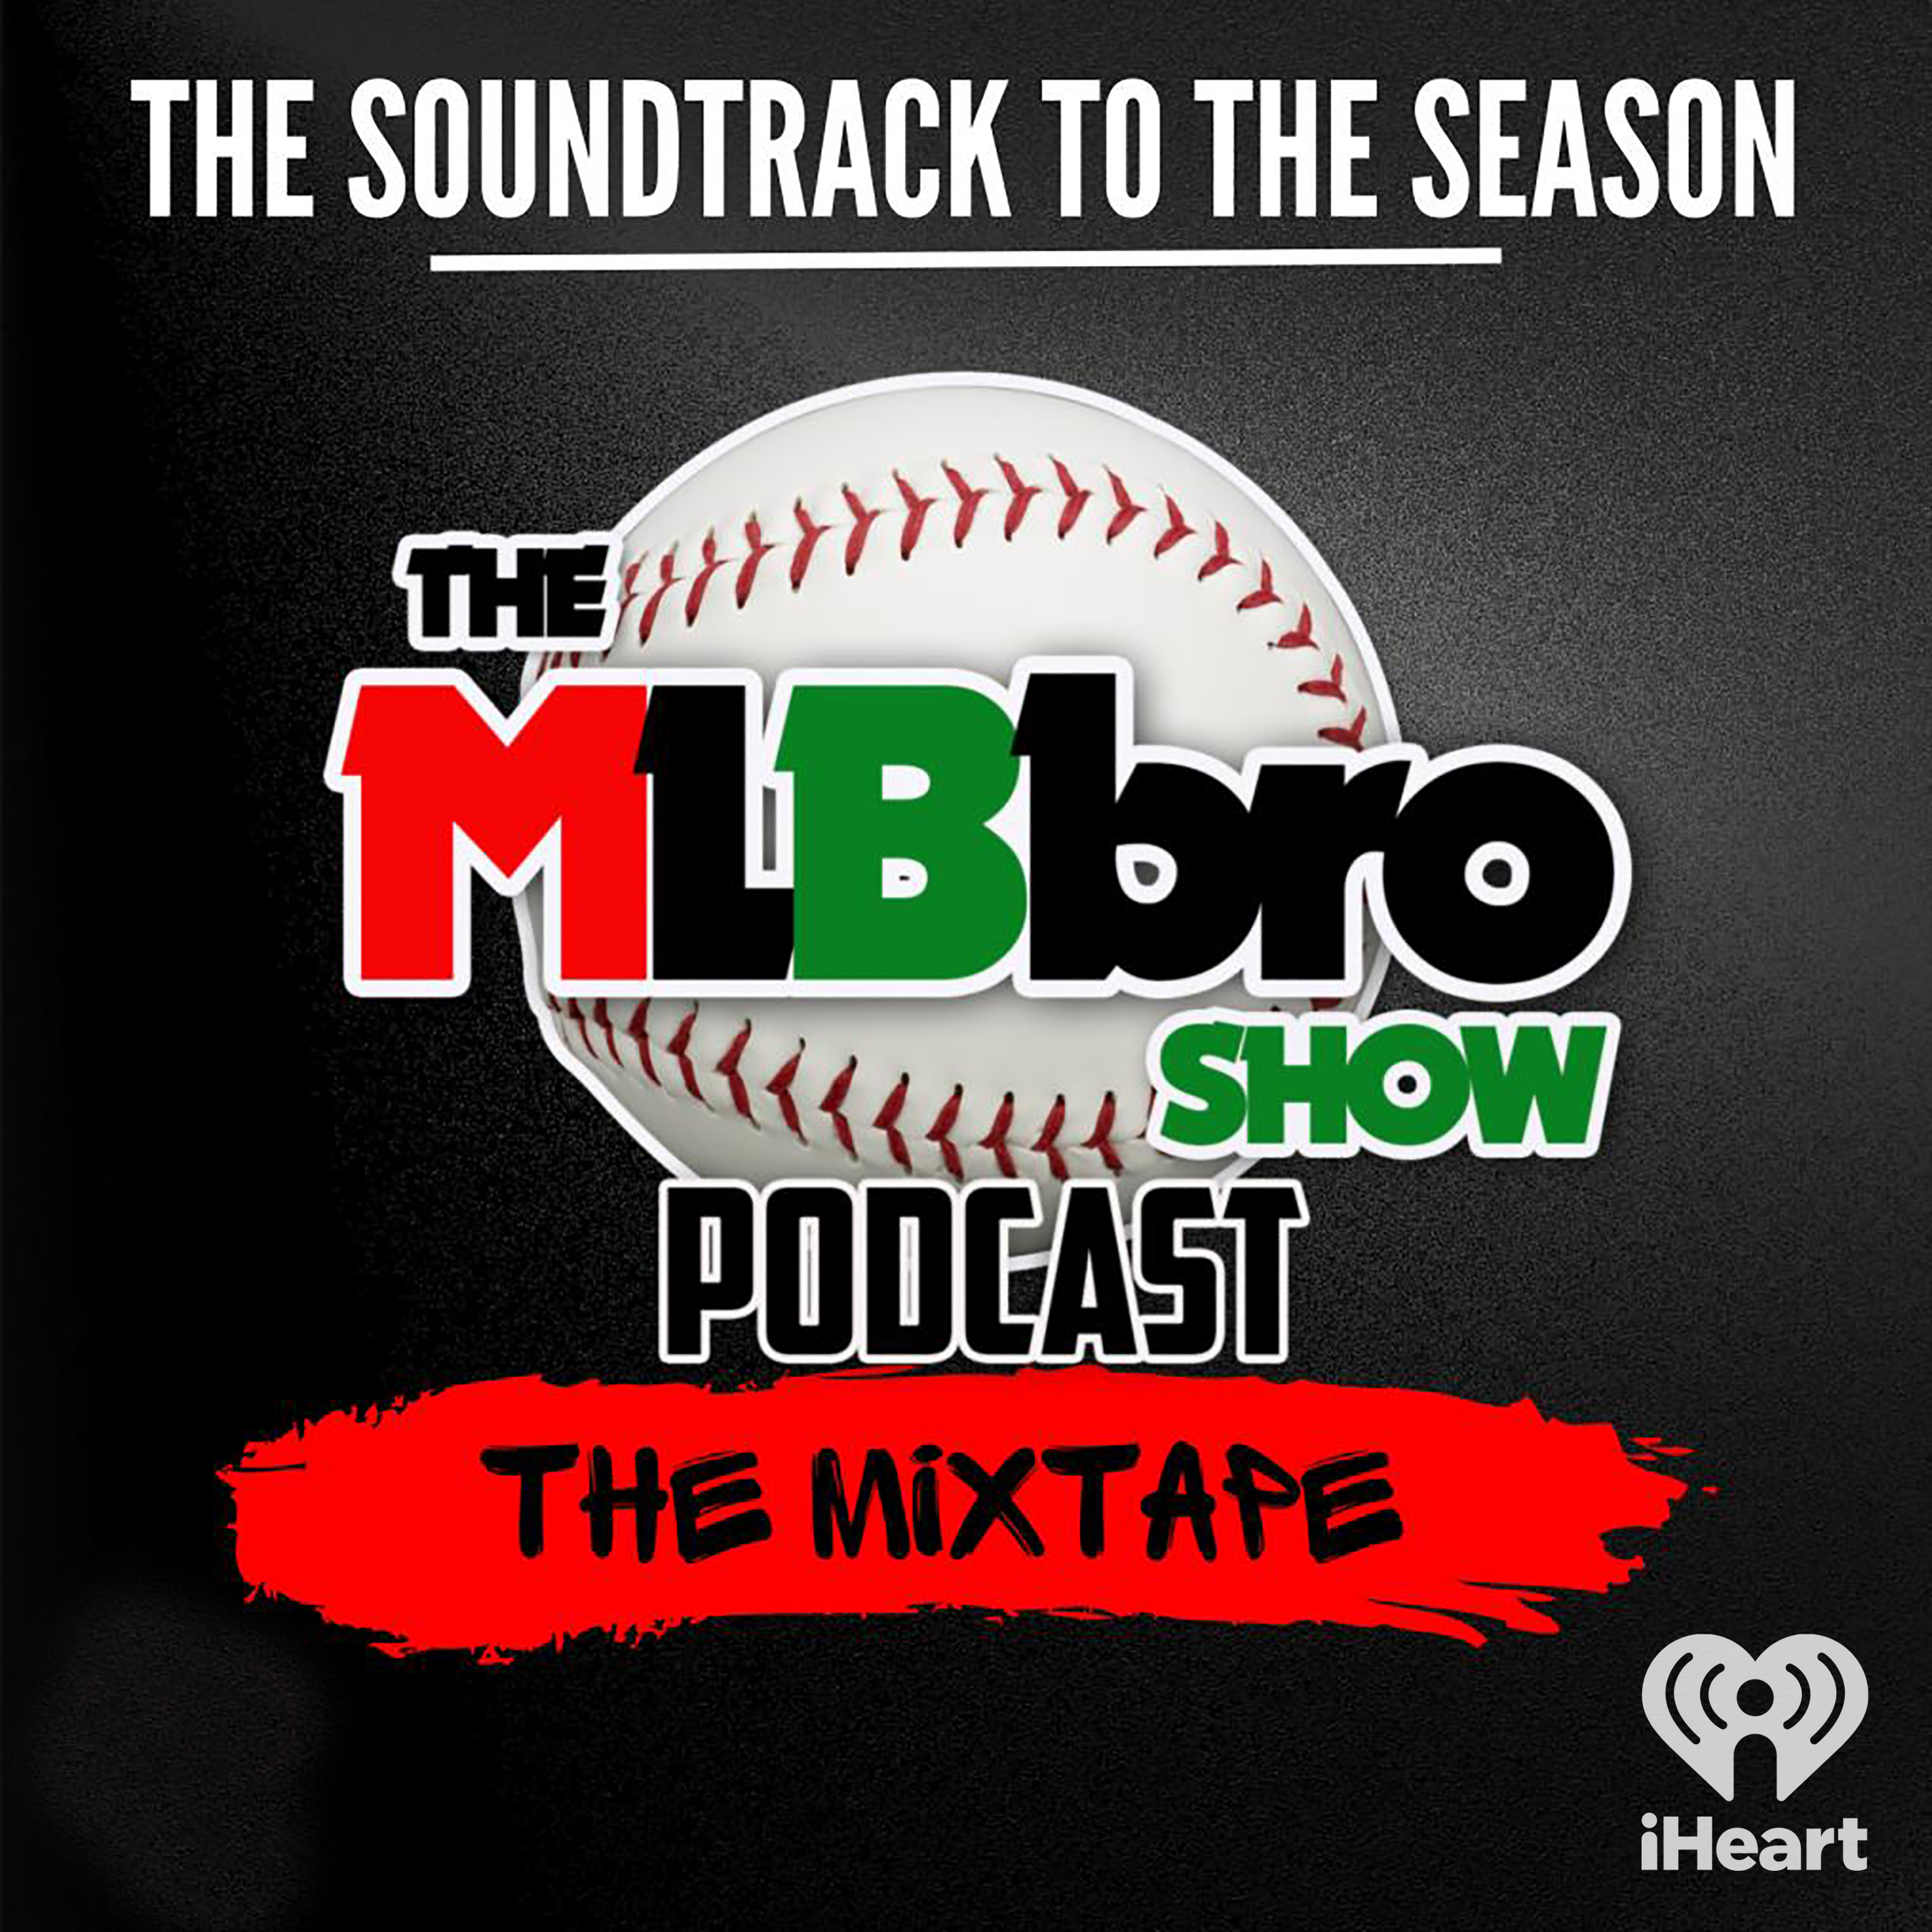 MLBbro Show Podcast The Mixtape Vol 3 Episode 20